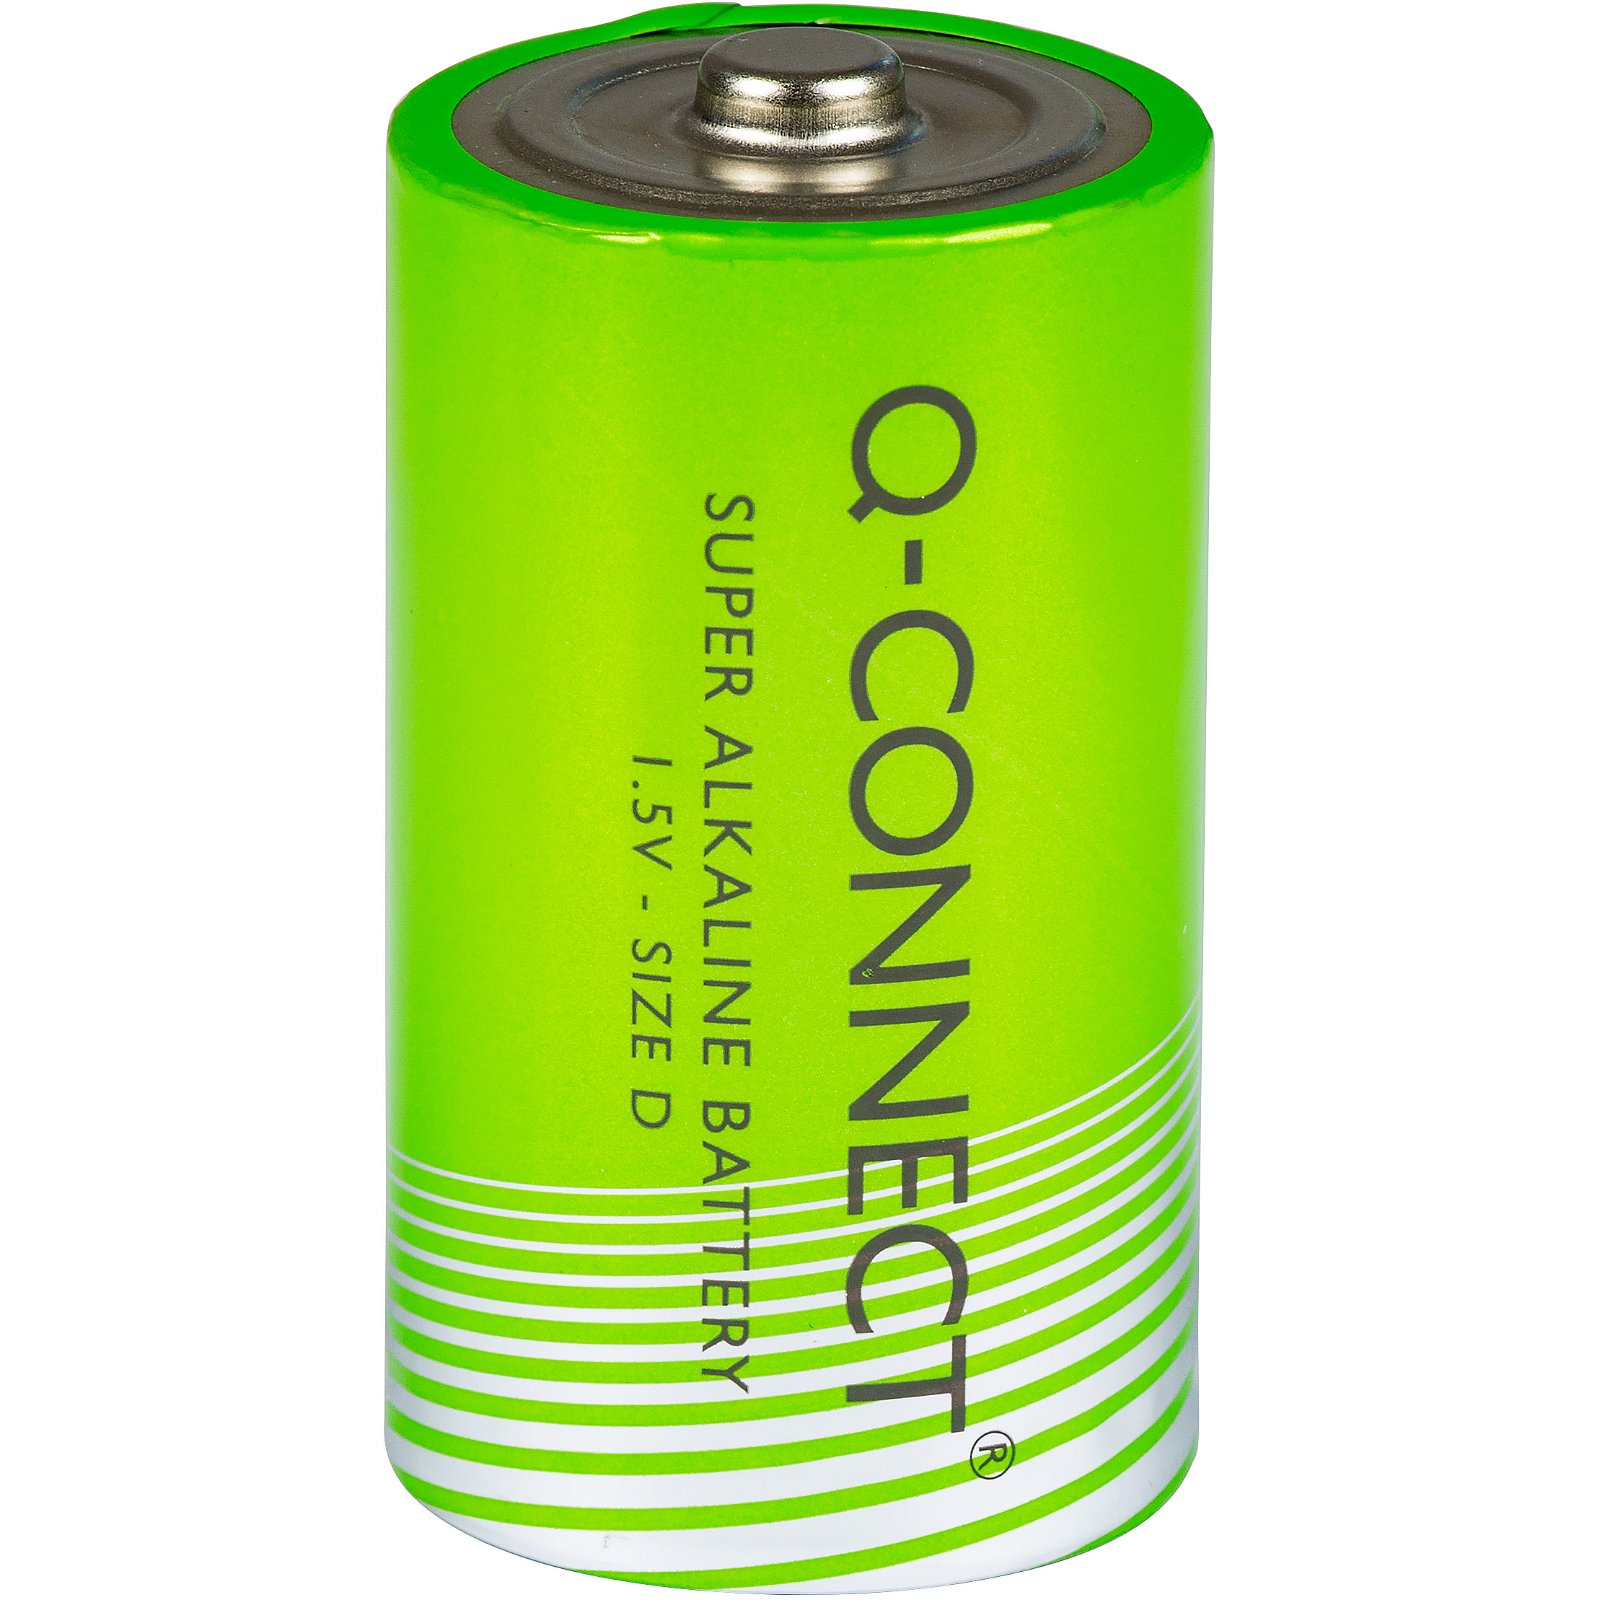 Q-connect D batteri D 1.5 v 2 stk